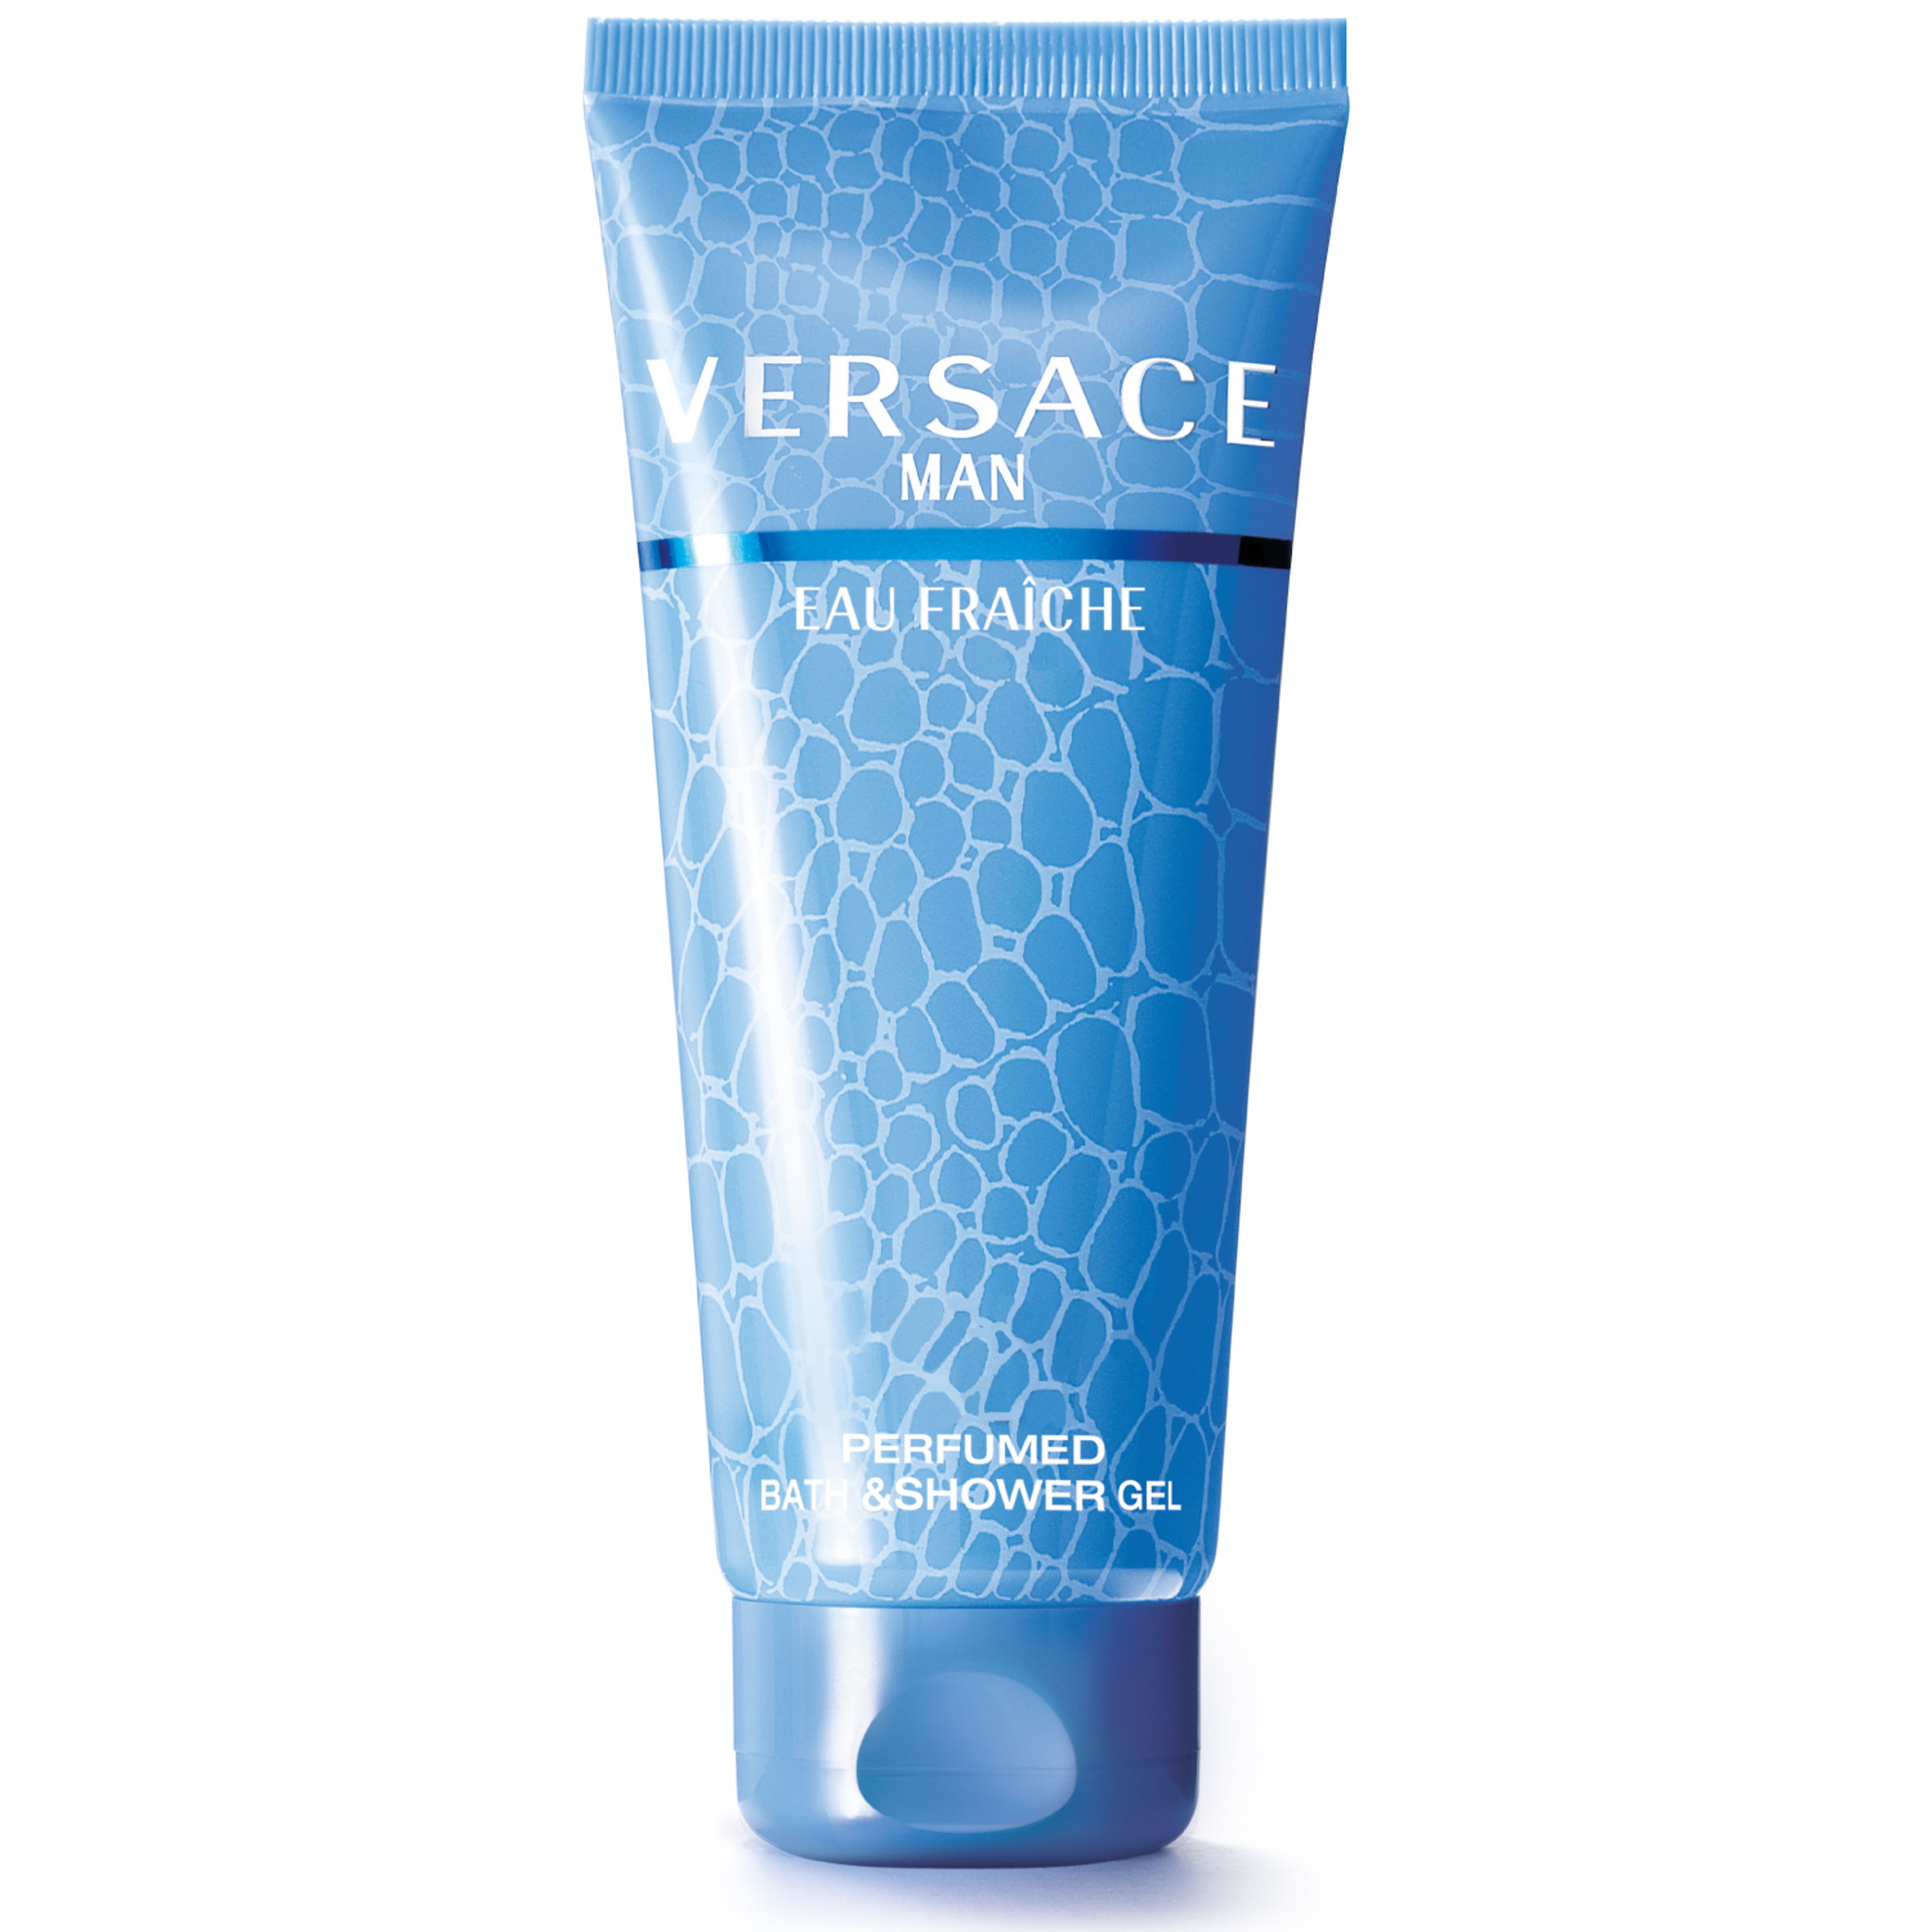 Versace Man Eau Fraiche Perfumed Bath & Shower Gel 1